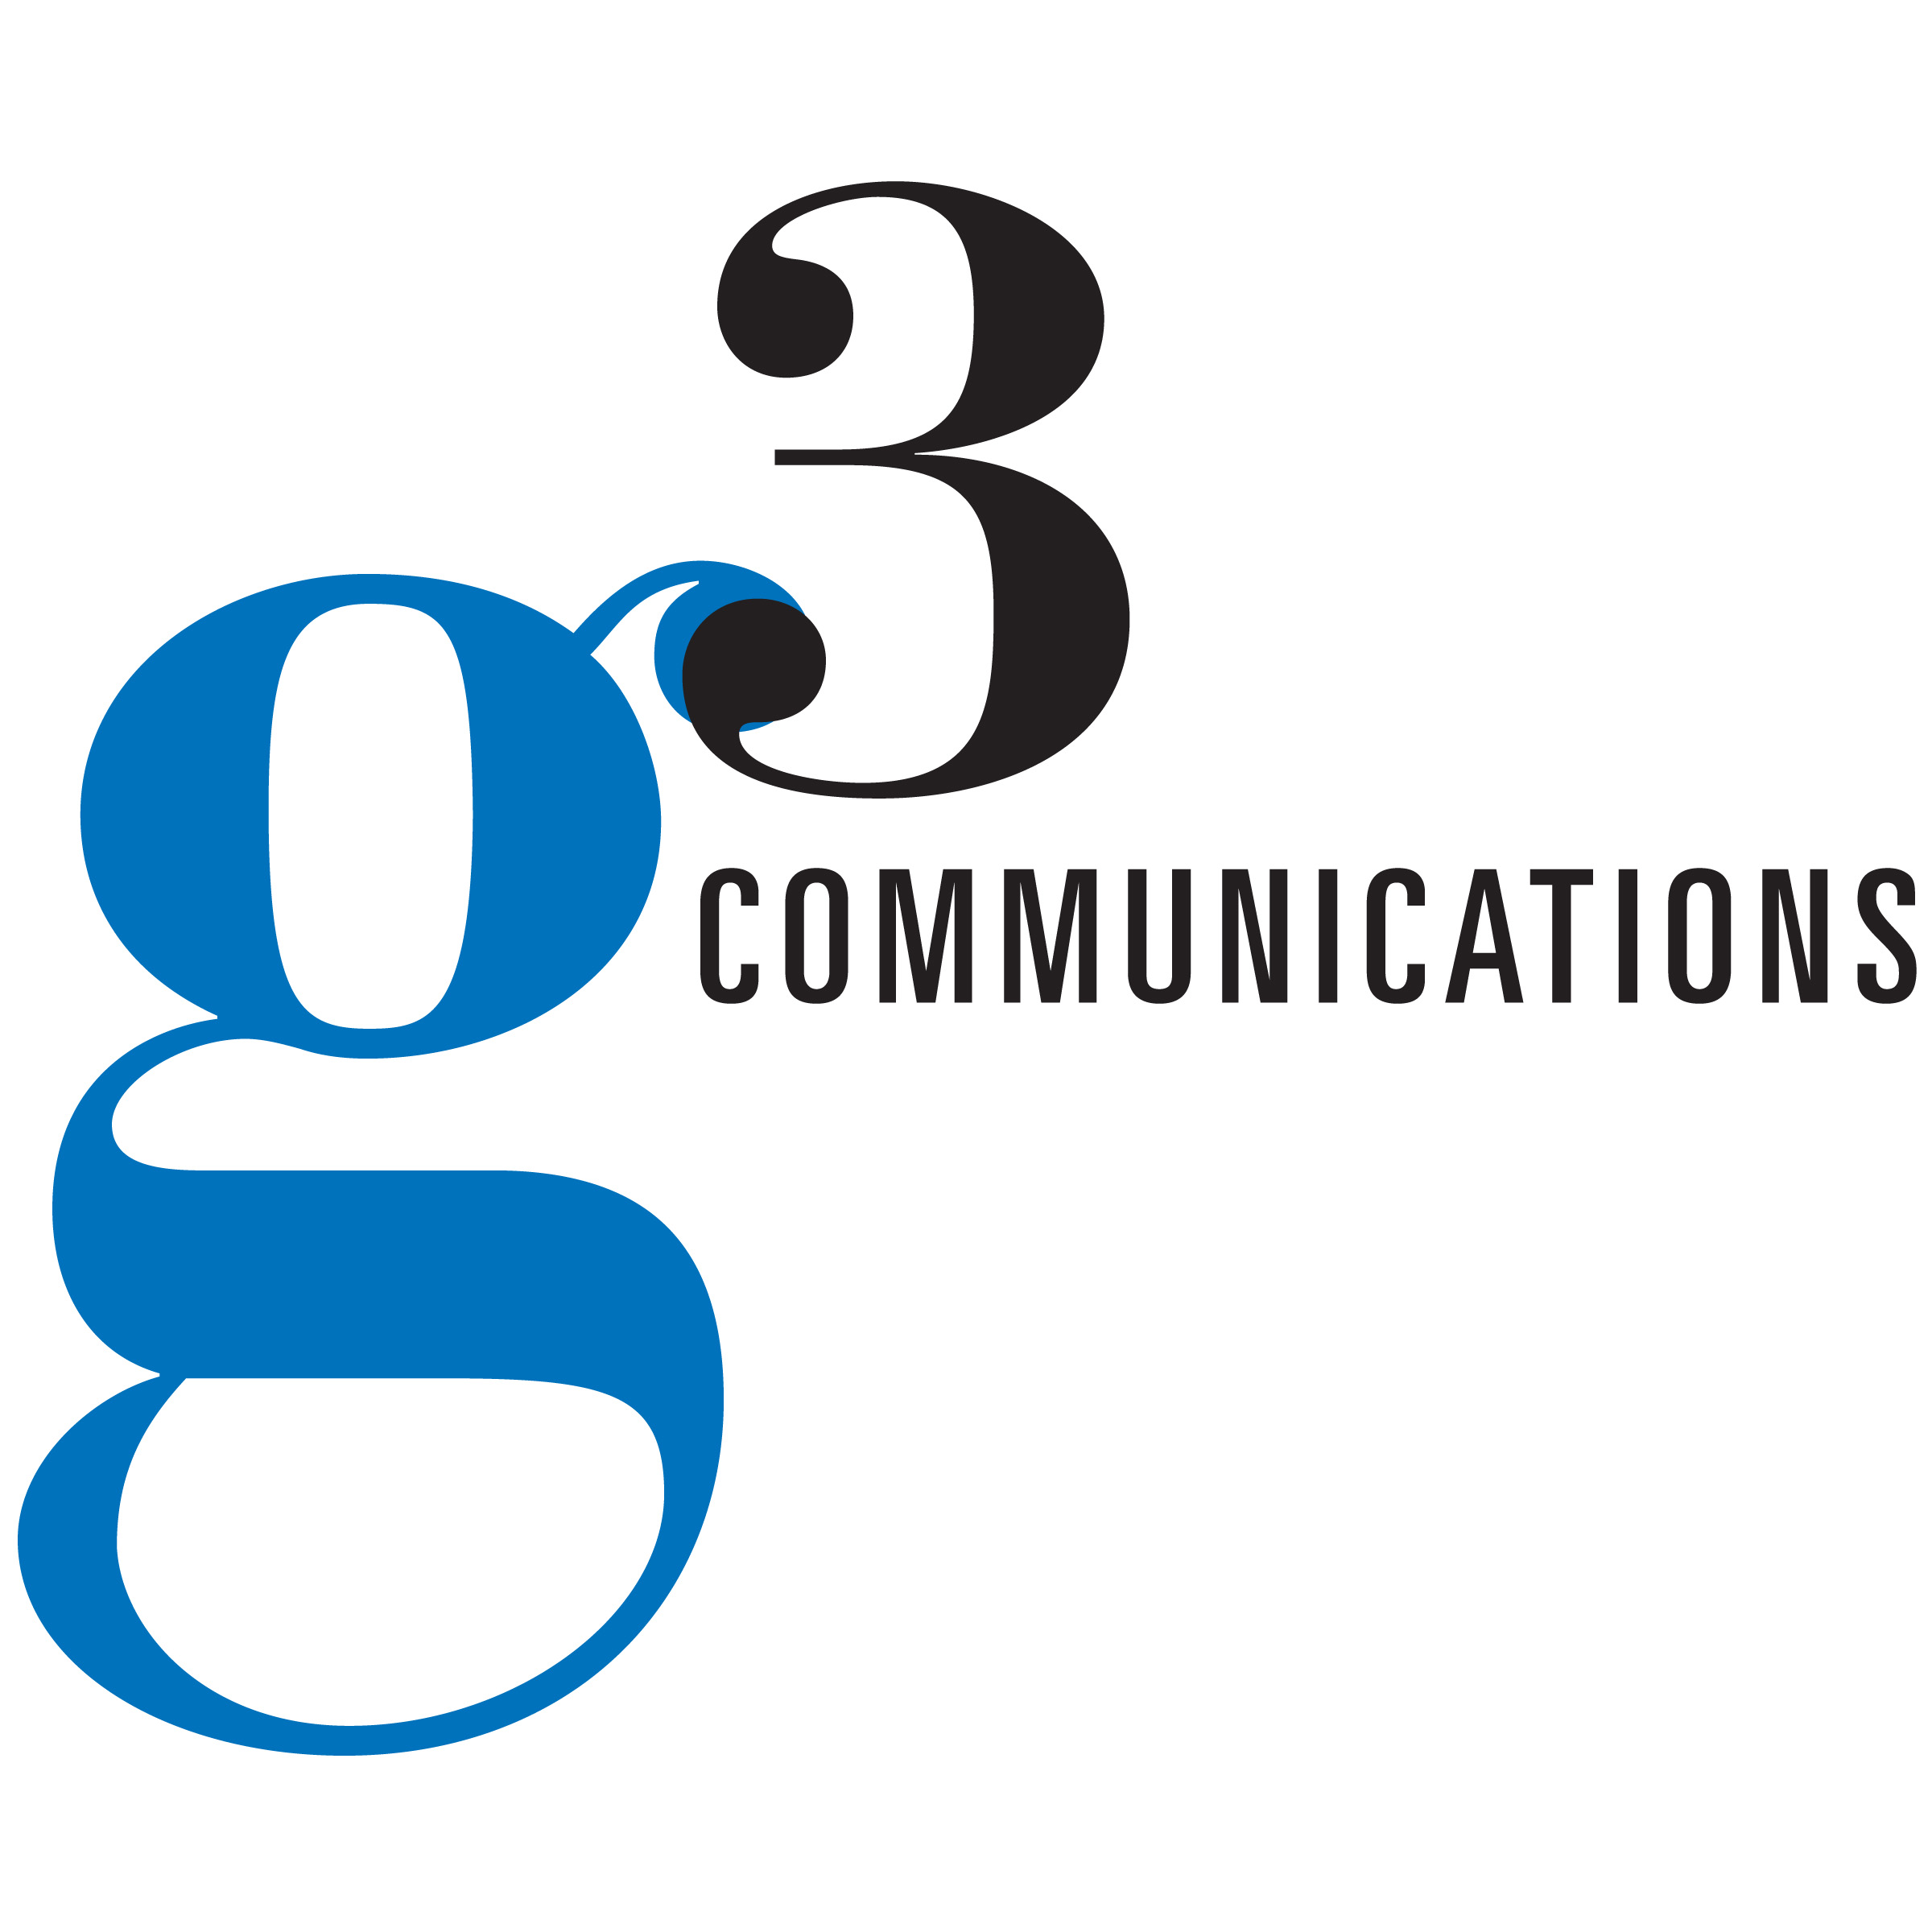 G3 Communications Logo